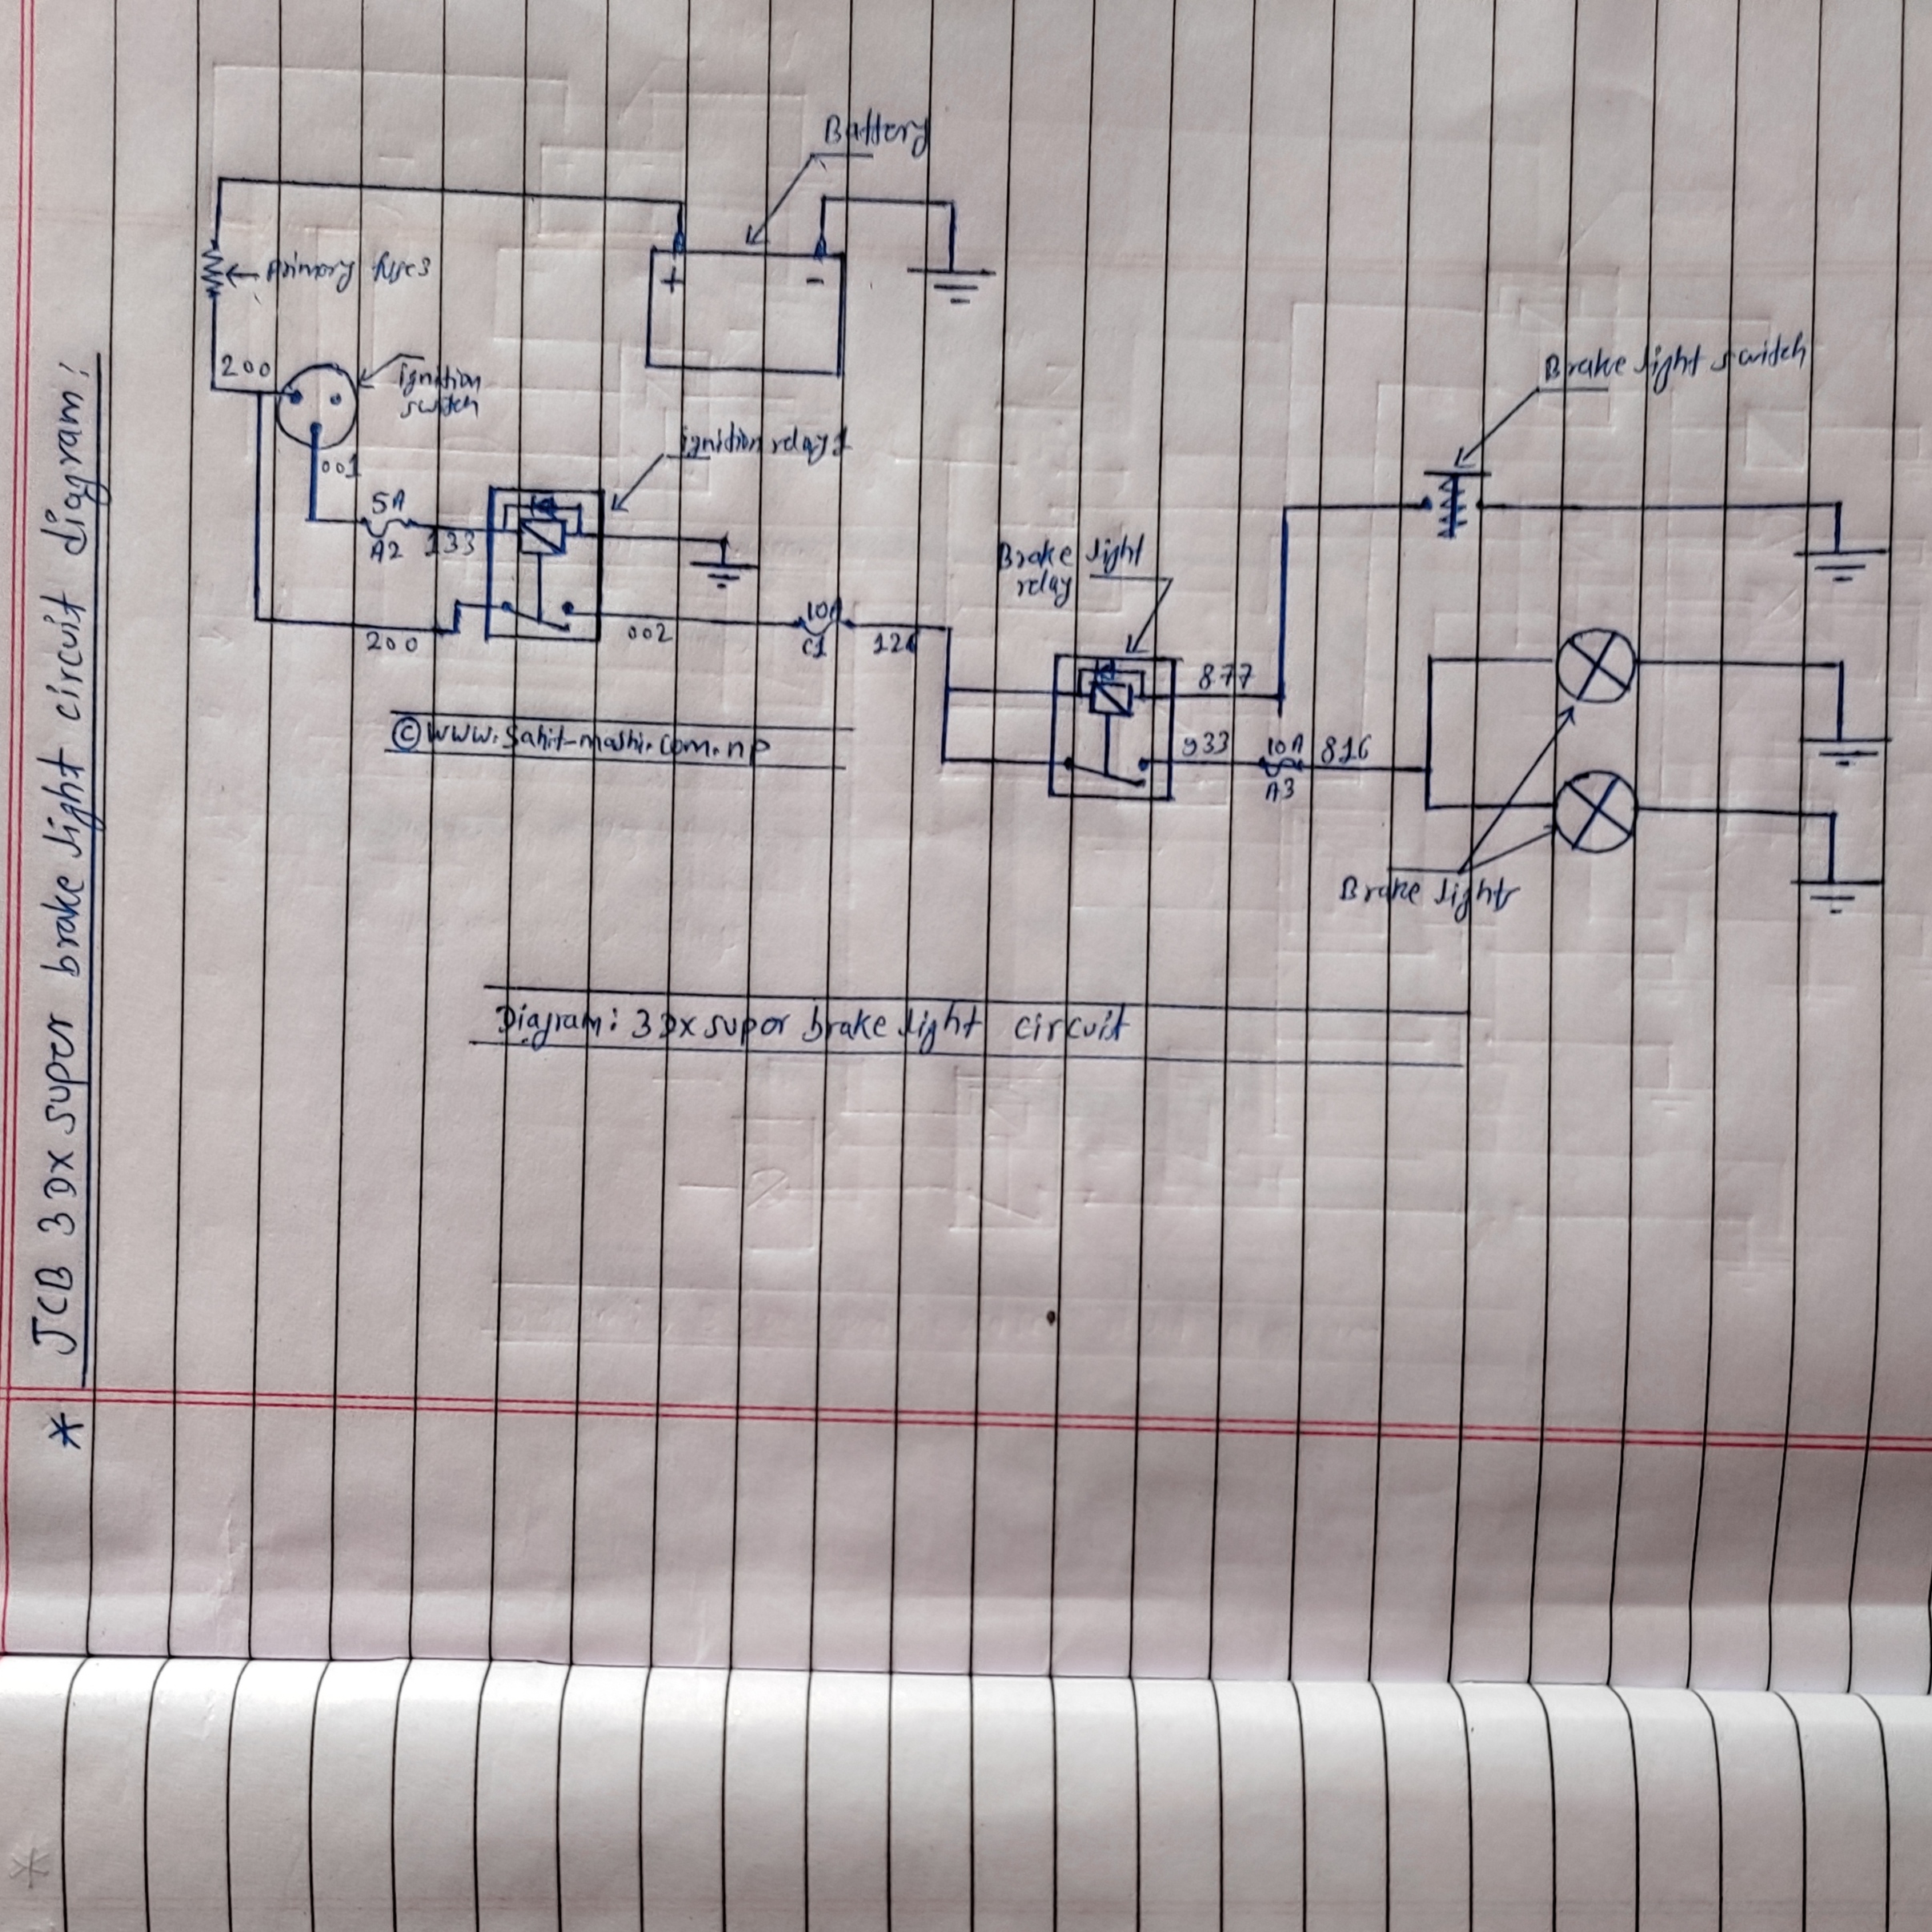 jcb 3dx super Brake light circuit diagram